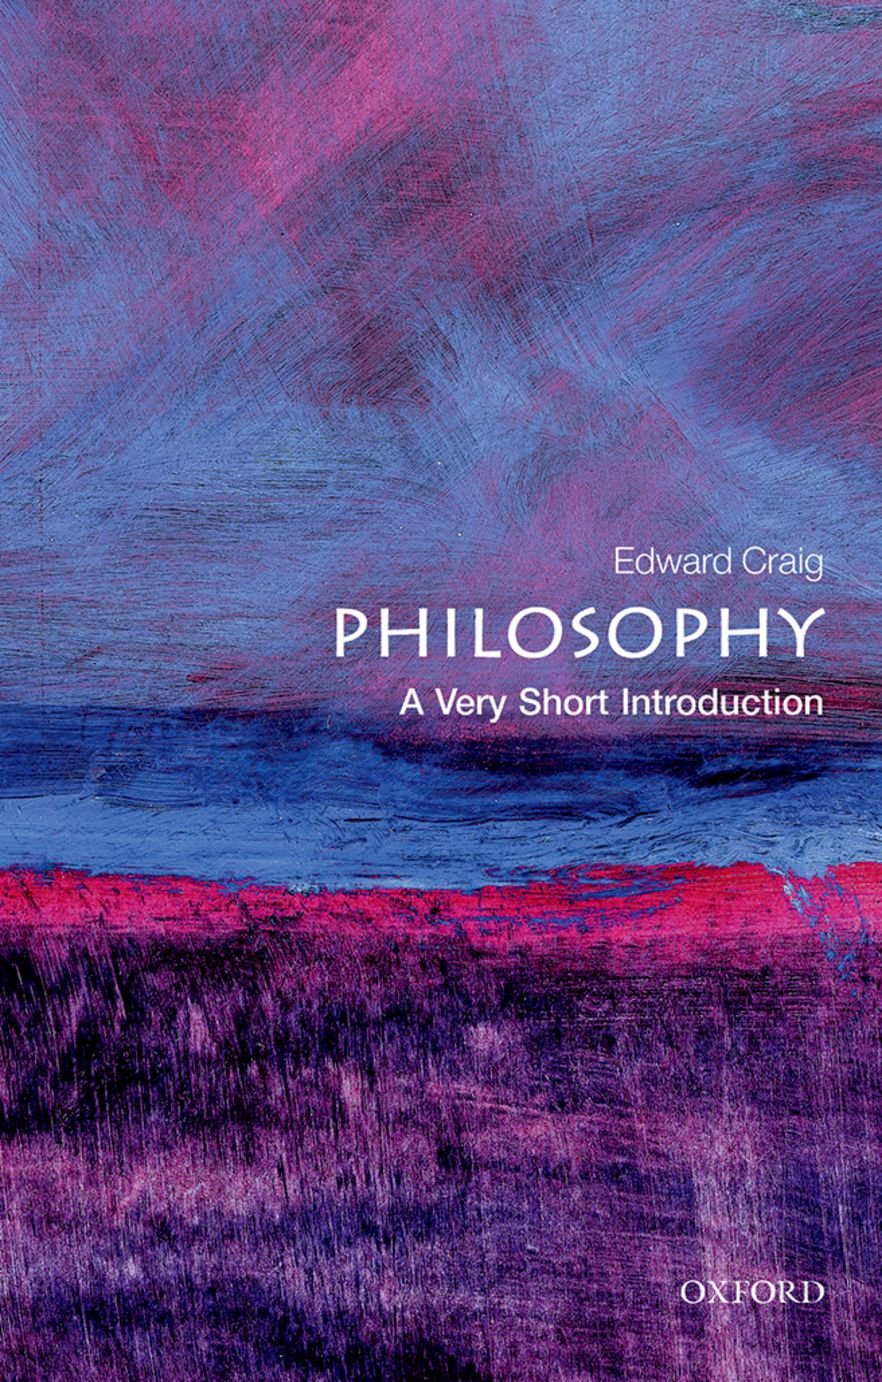 Philosophy: A Very Short Introduction ร้านหนังสือและสิ่งของ เป็นร้านหนังสือภาษาอังกฤษหายาก และร้านกาแฟ หรือ บุ๊คคาเฟ่ ตั้งอยู่สุขุมวิท กรุงเทพ